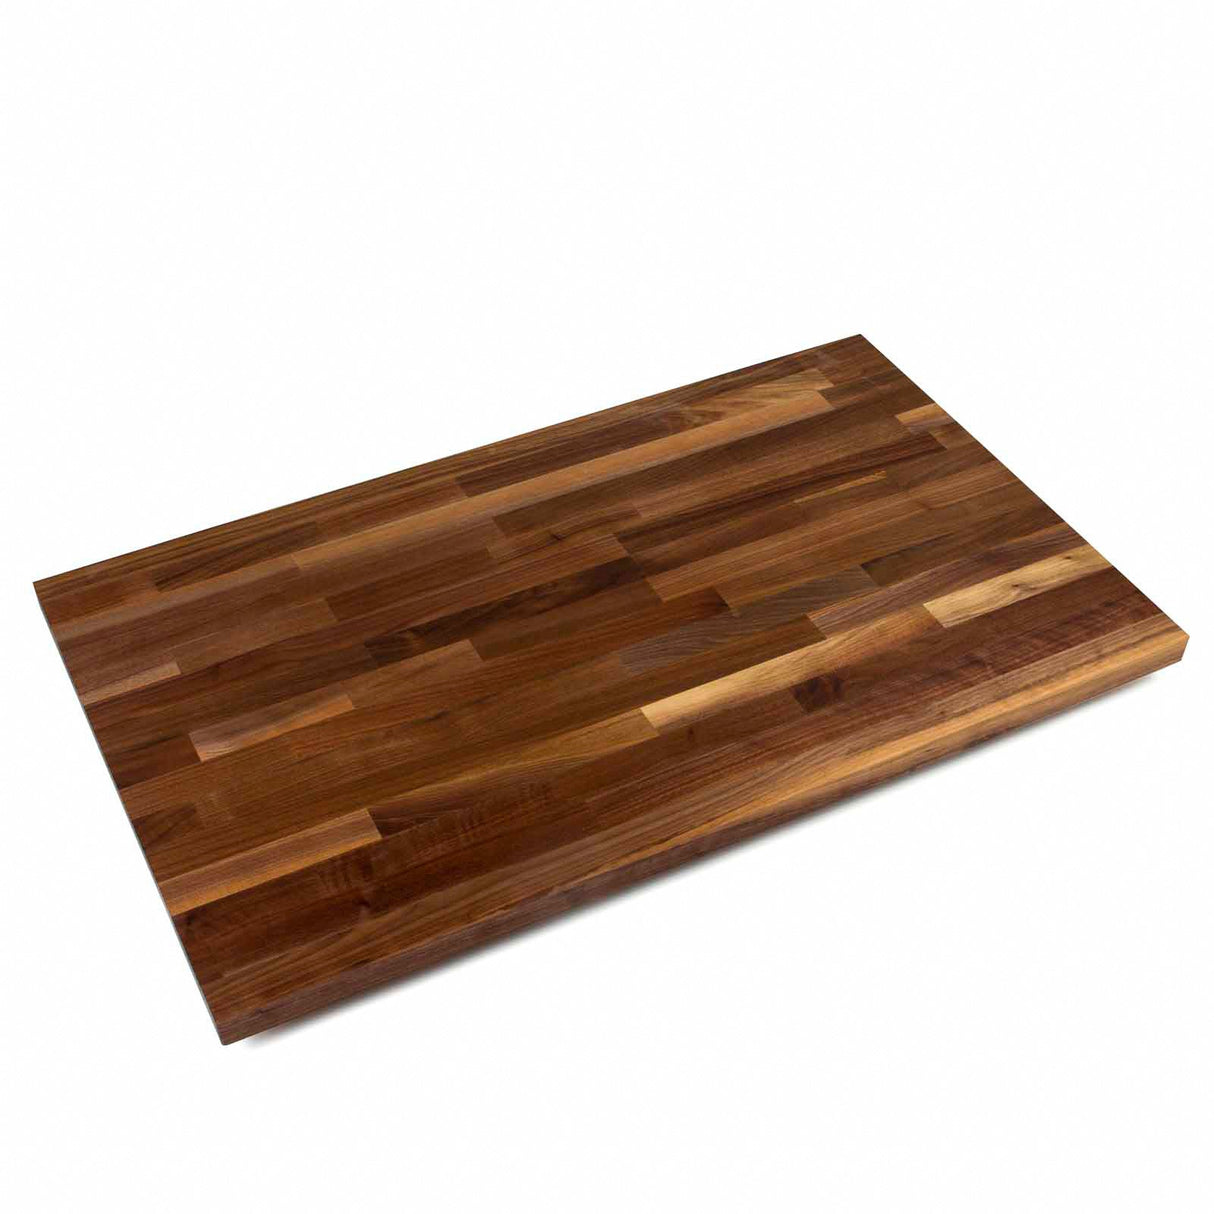 John Boos WALKCT-BL1825-O Blended Walnut Solid Wood Finish Natural Edge Grain Kitchen Cutting Board Island Top Butcher Block, 18 x 25 1.5 inches WALNUT BLENDED KCT 18X25X1-1/2 OIL